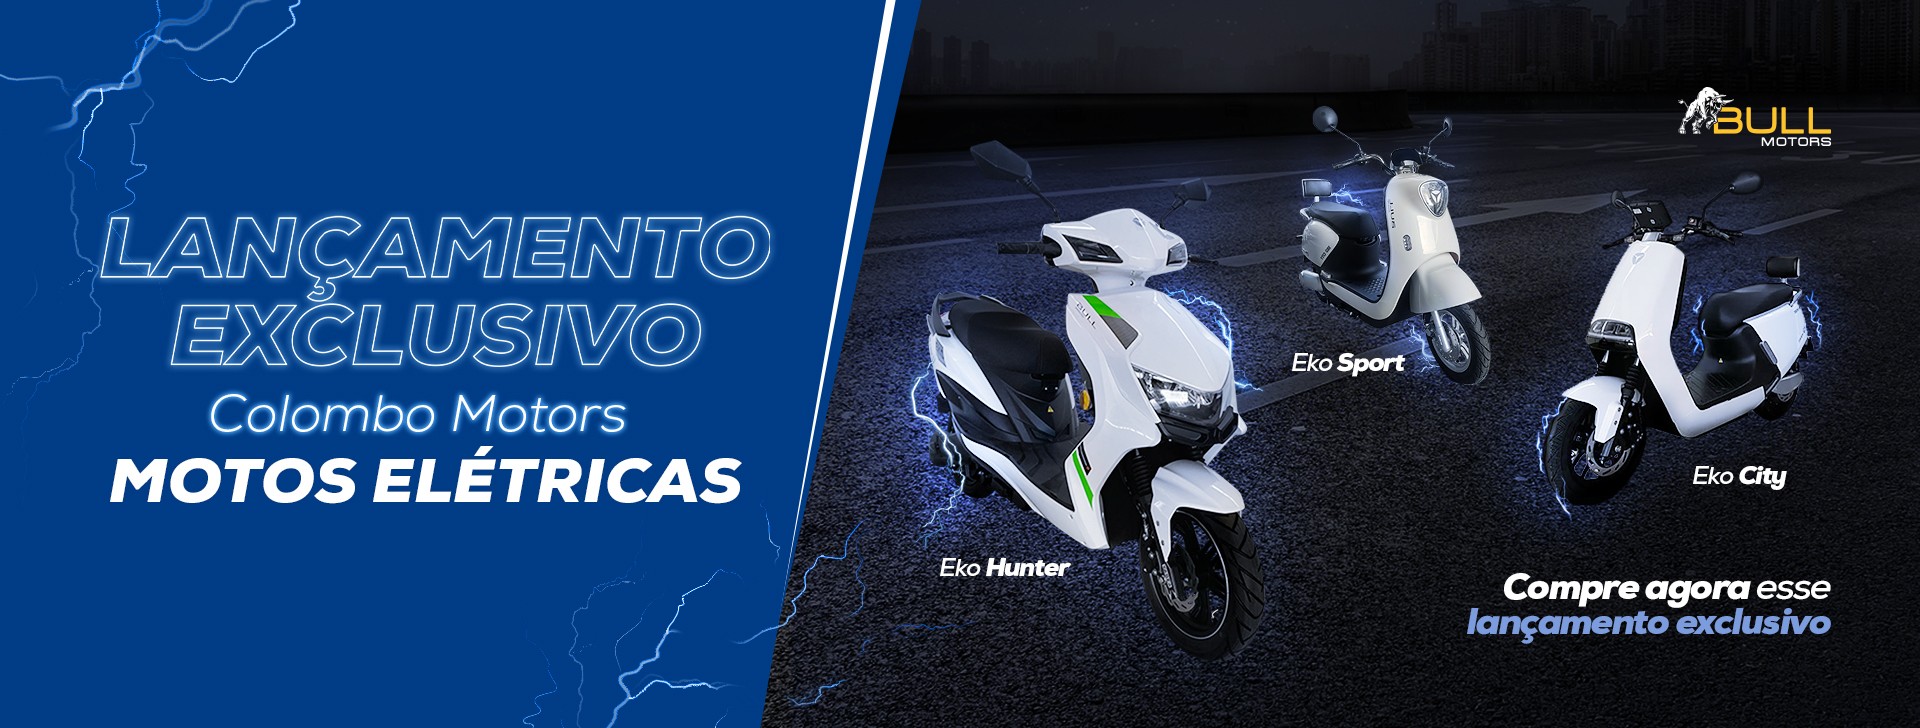 Lançamento Exclusivo: Colombo Motors tem novos modelos de scooters elétricas disponíveis